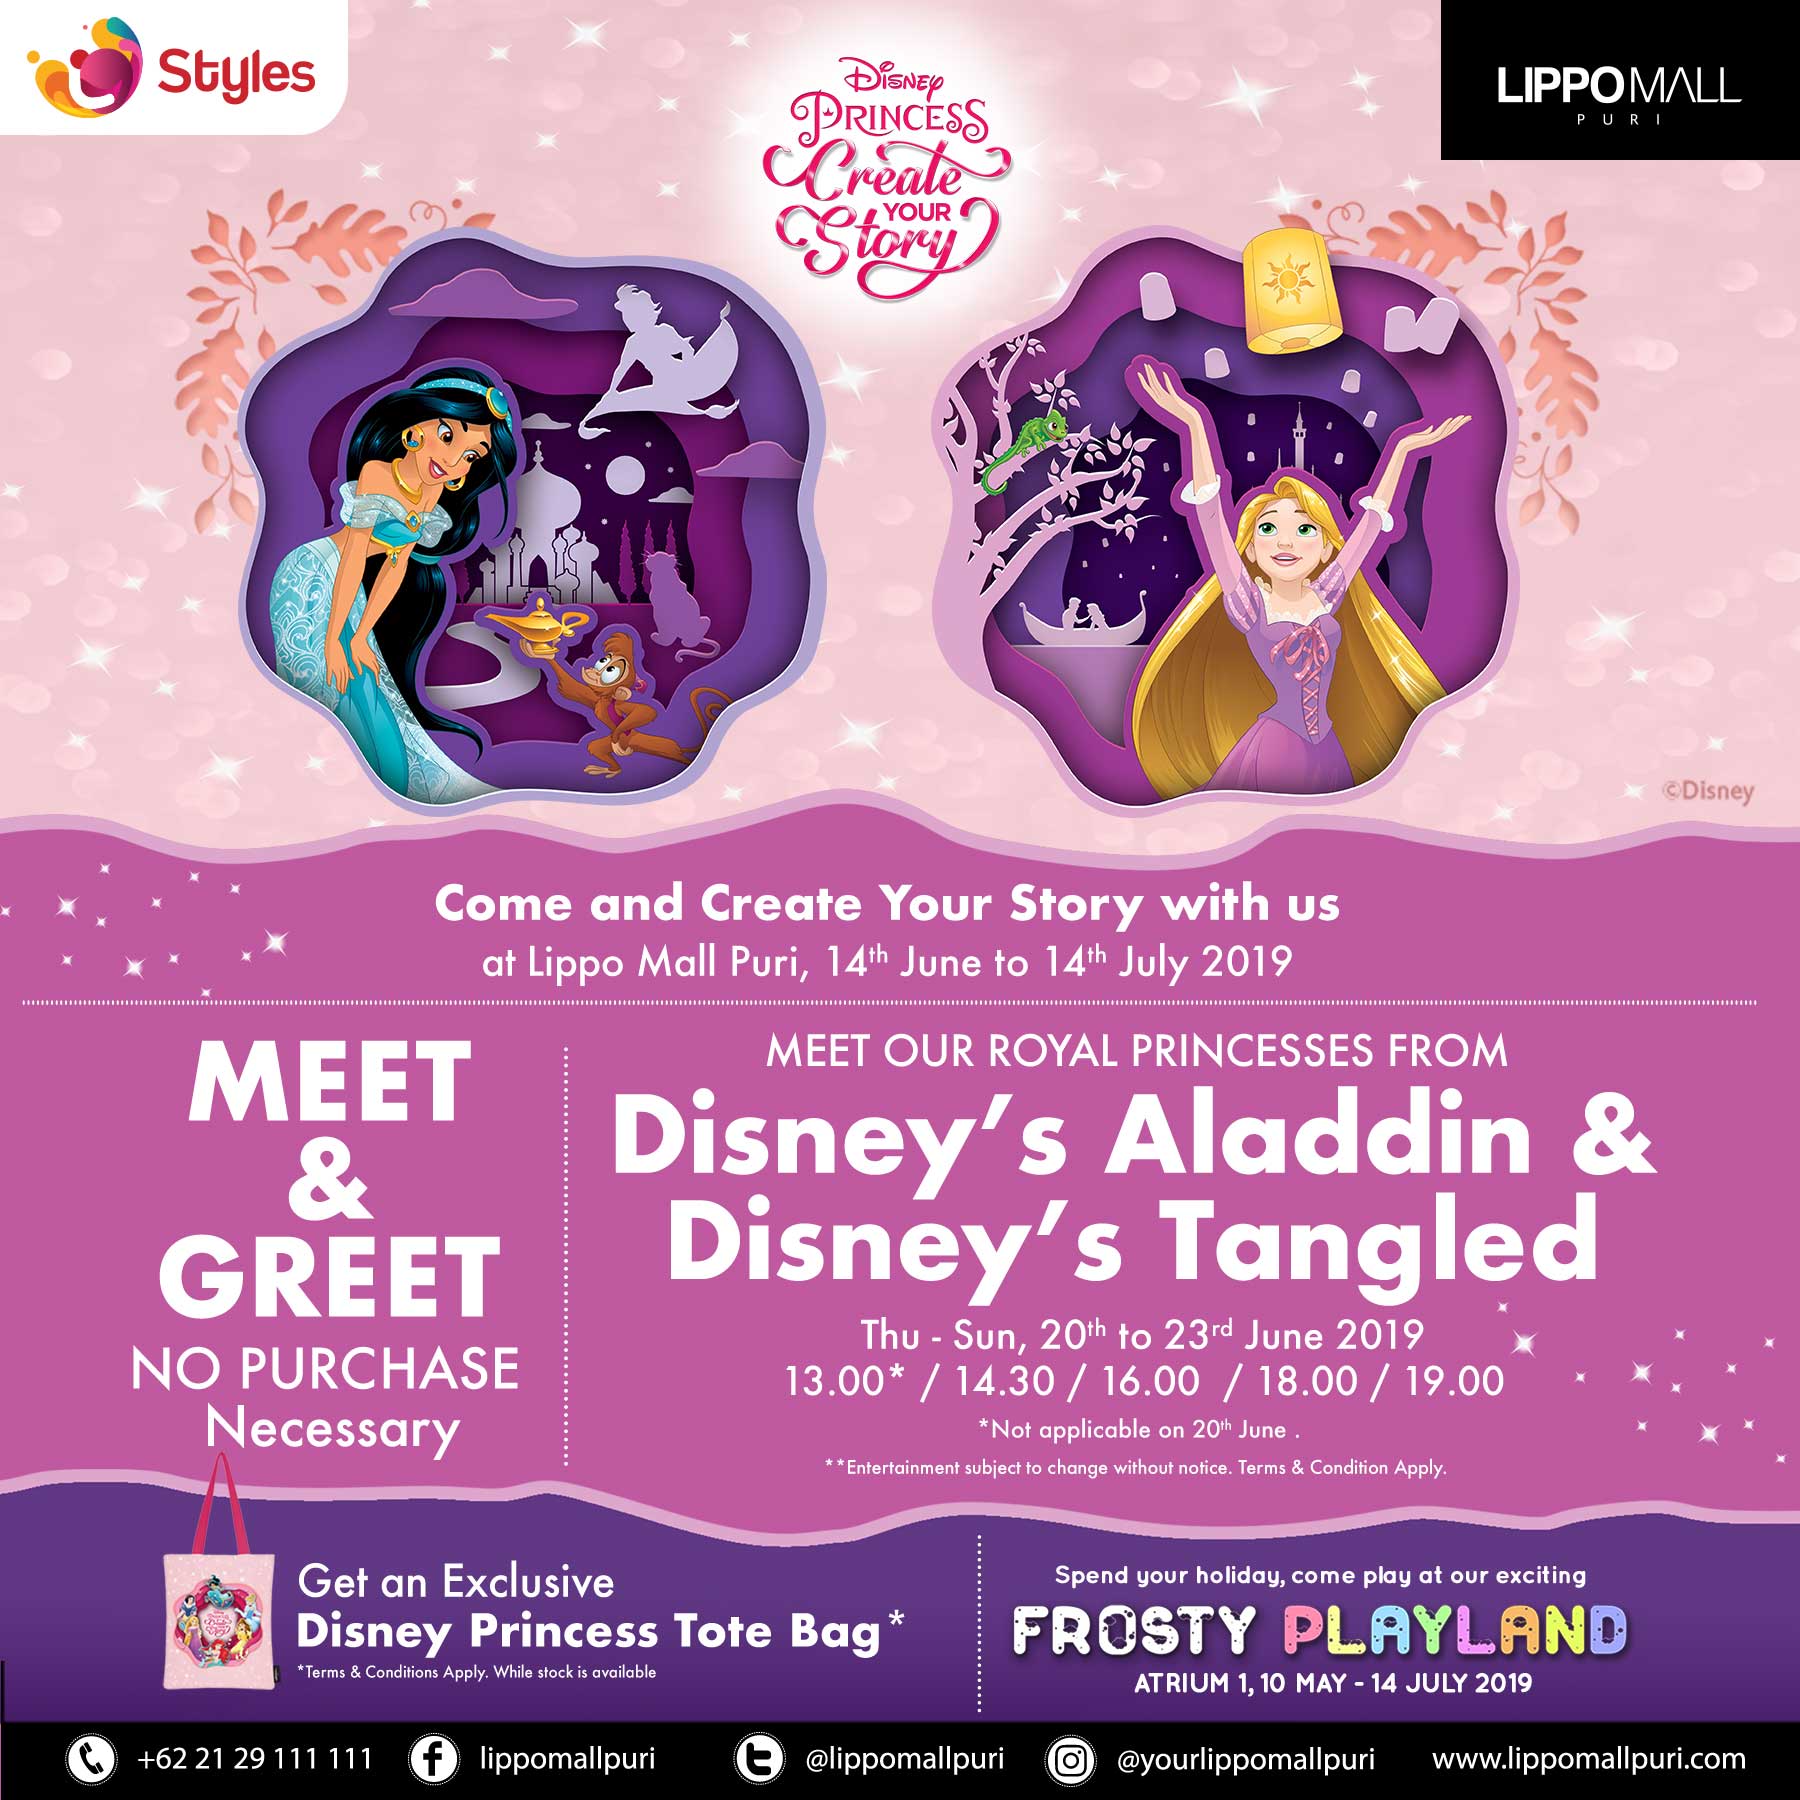 Disney Princess - create your story in lippo mall puri st. moritz